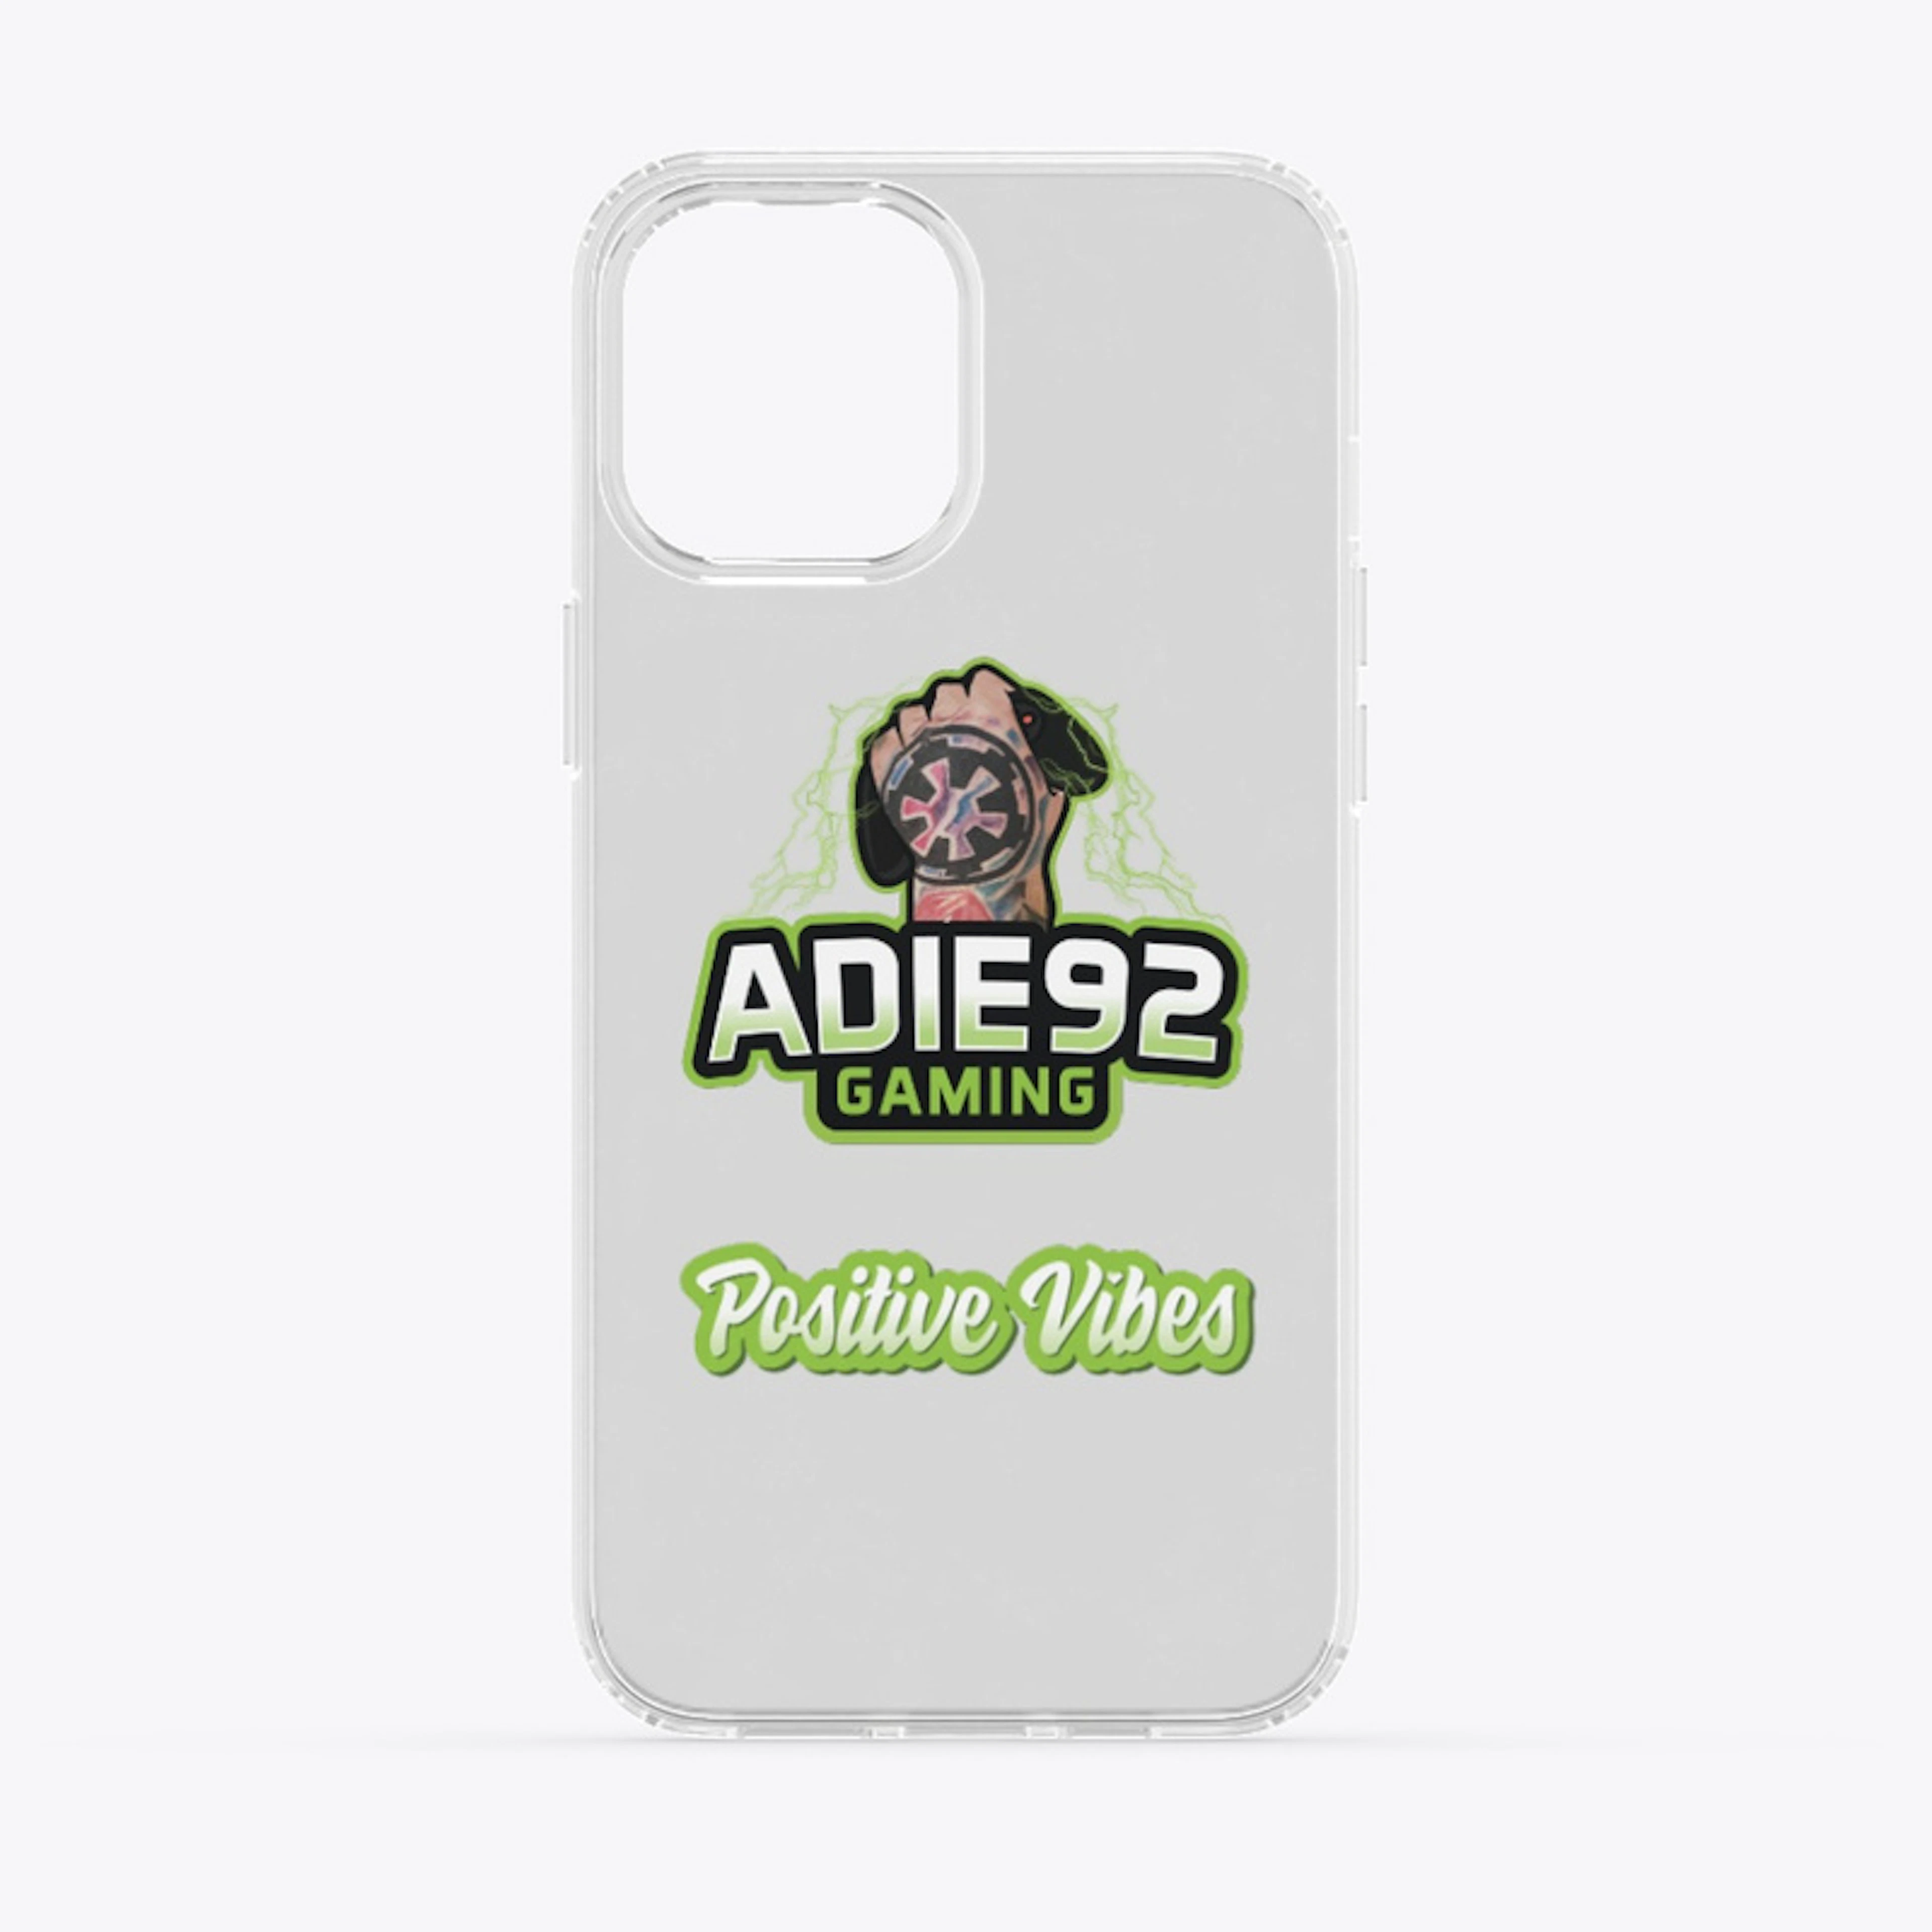 Adie92 iPhone Clear Case